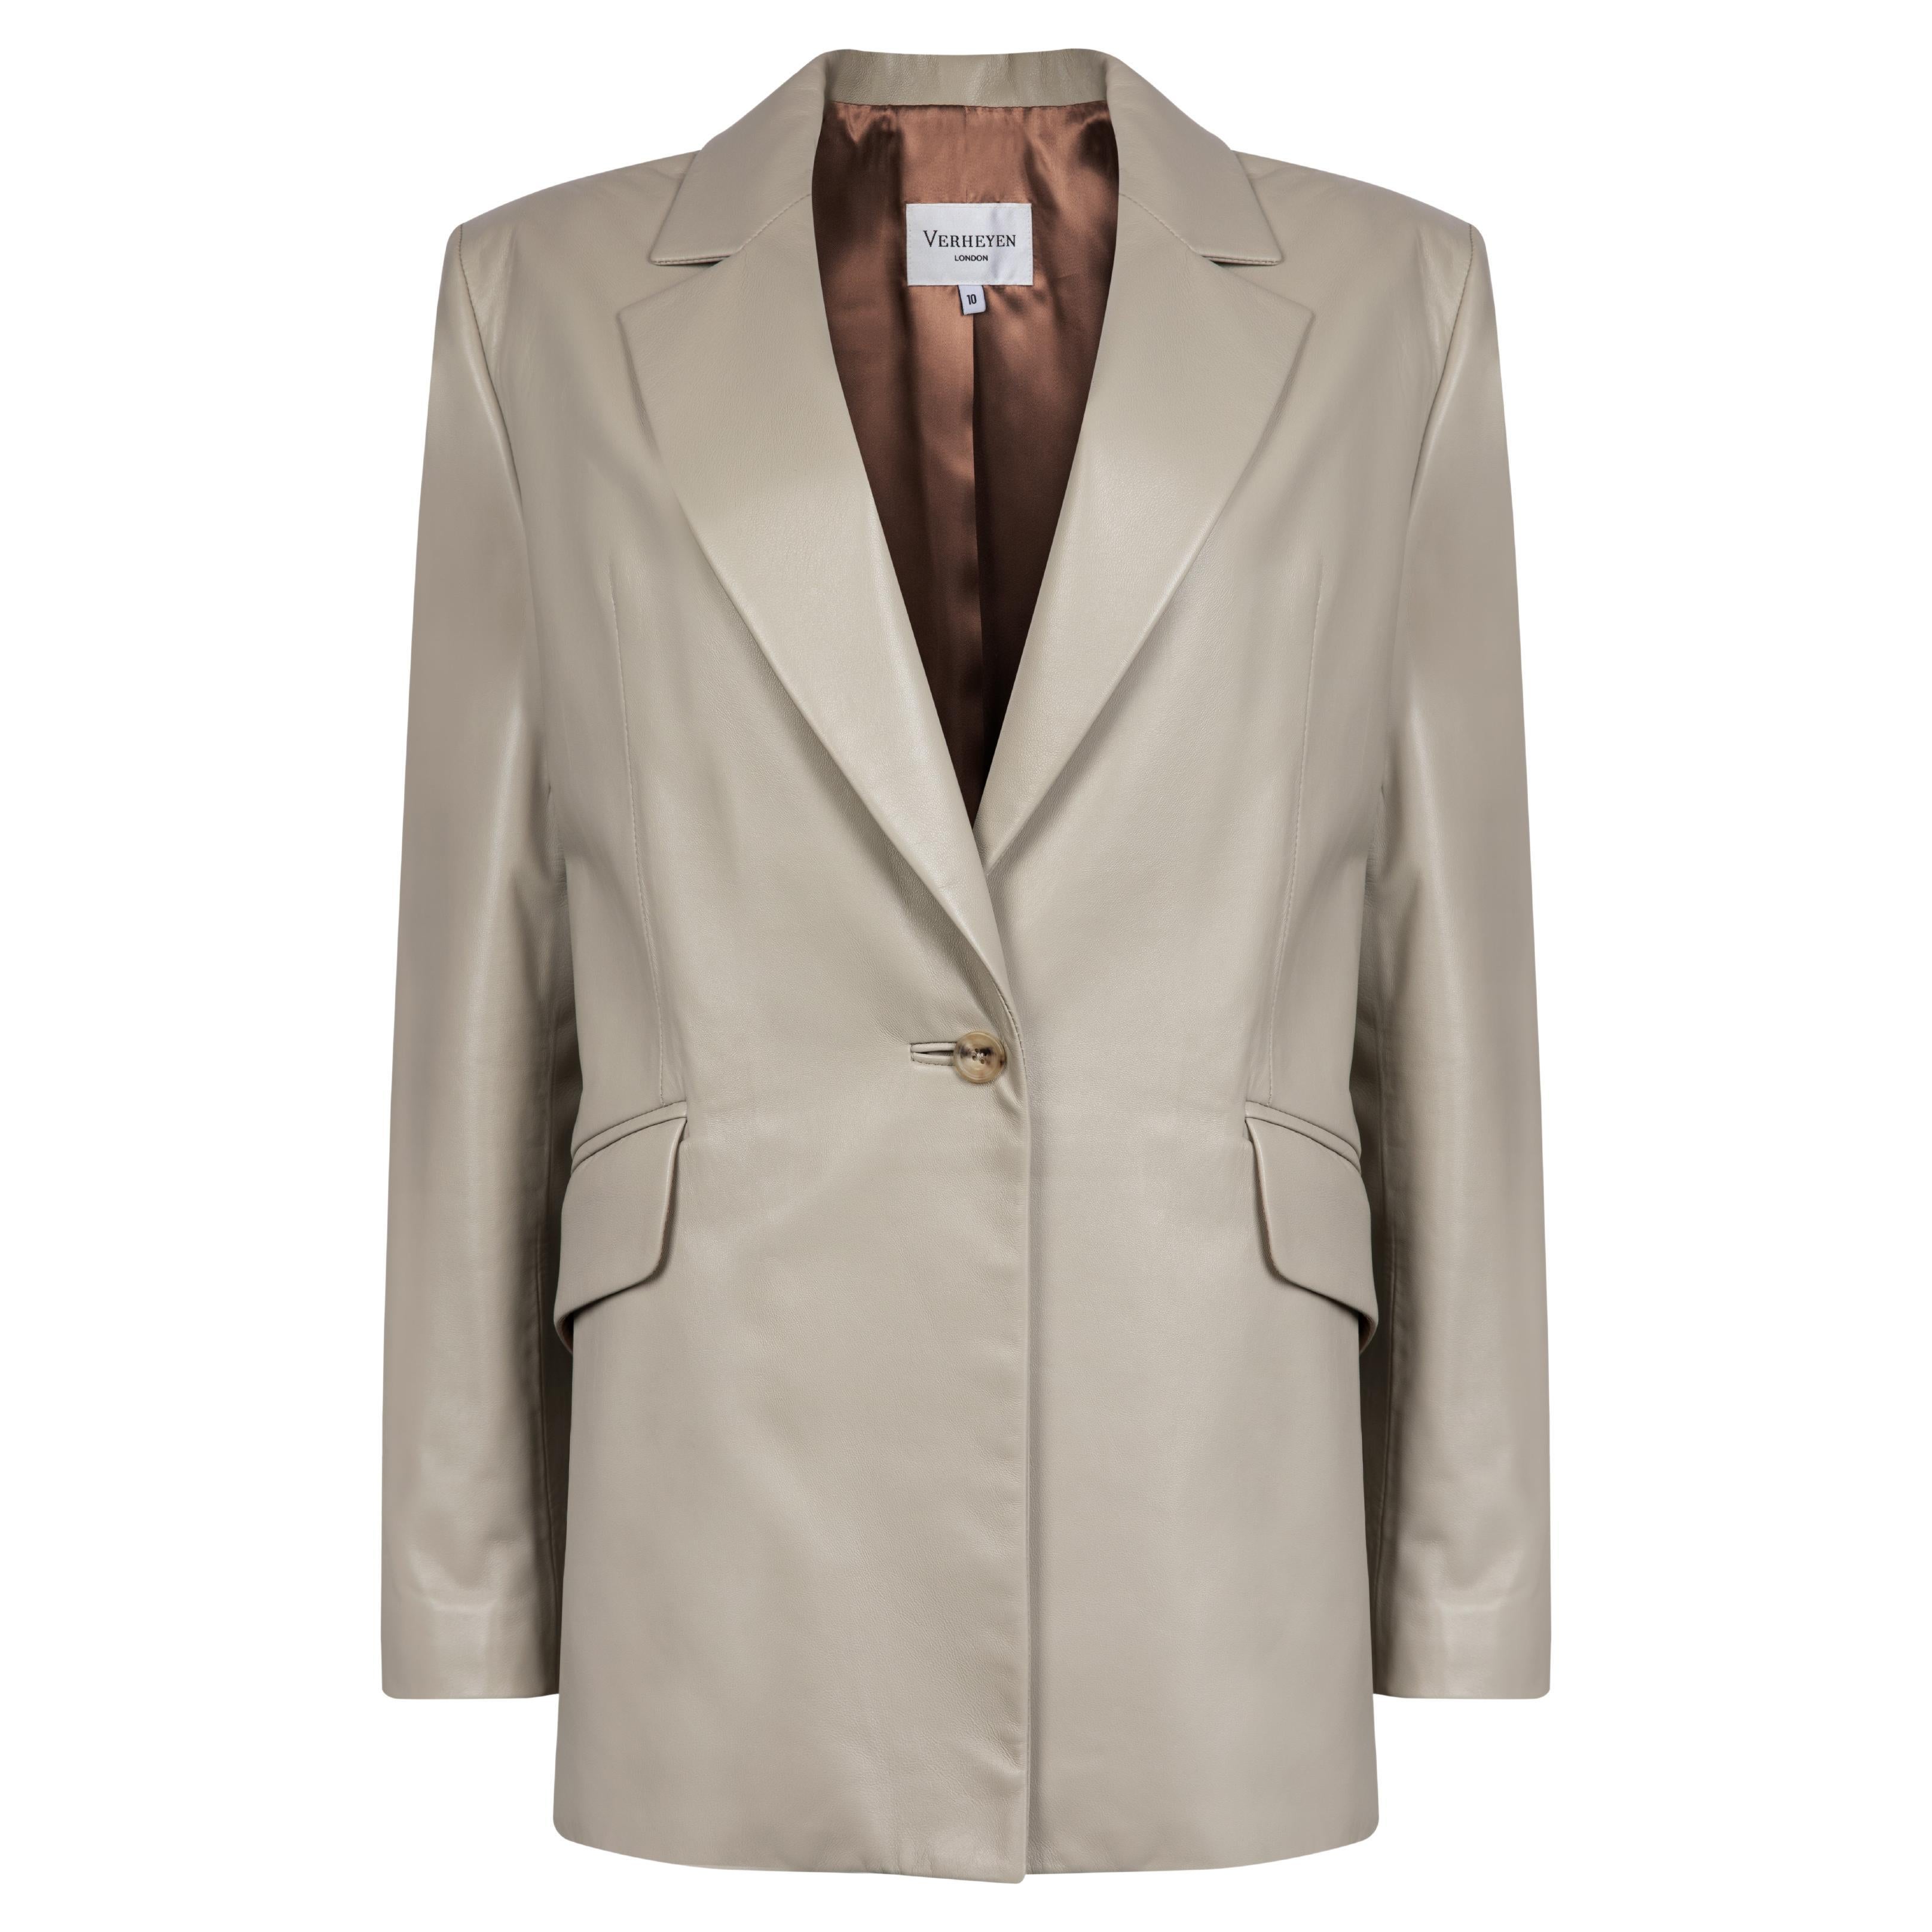 Verheyen London Chesca Oversize Blazer in Stone Grey Leather, Size 8 For Sale